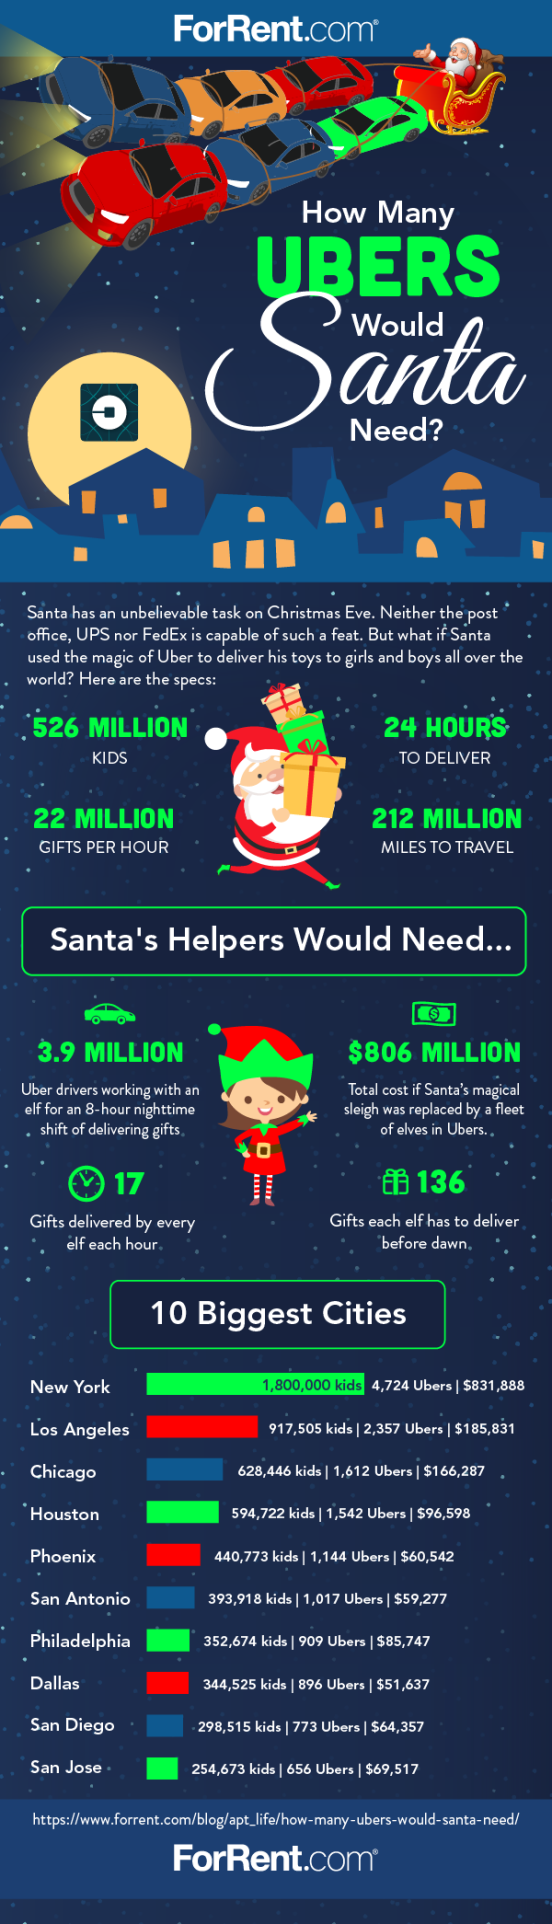 How Many Ubers Would Santa Need?